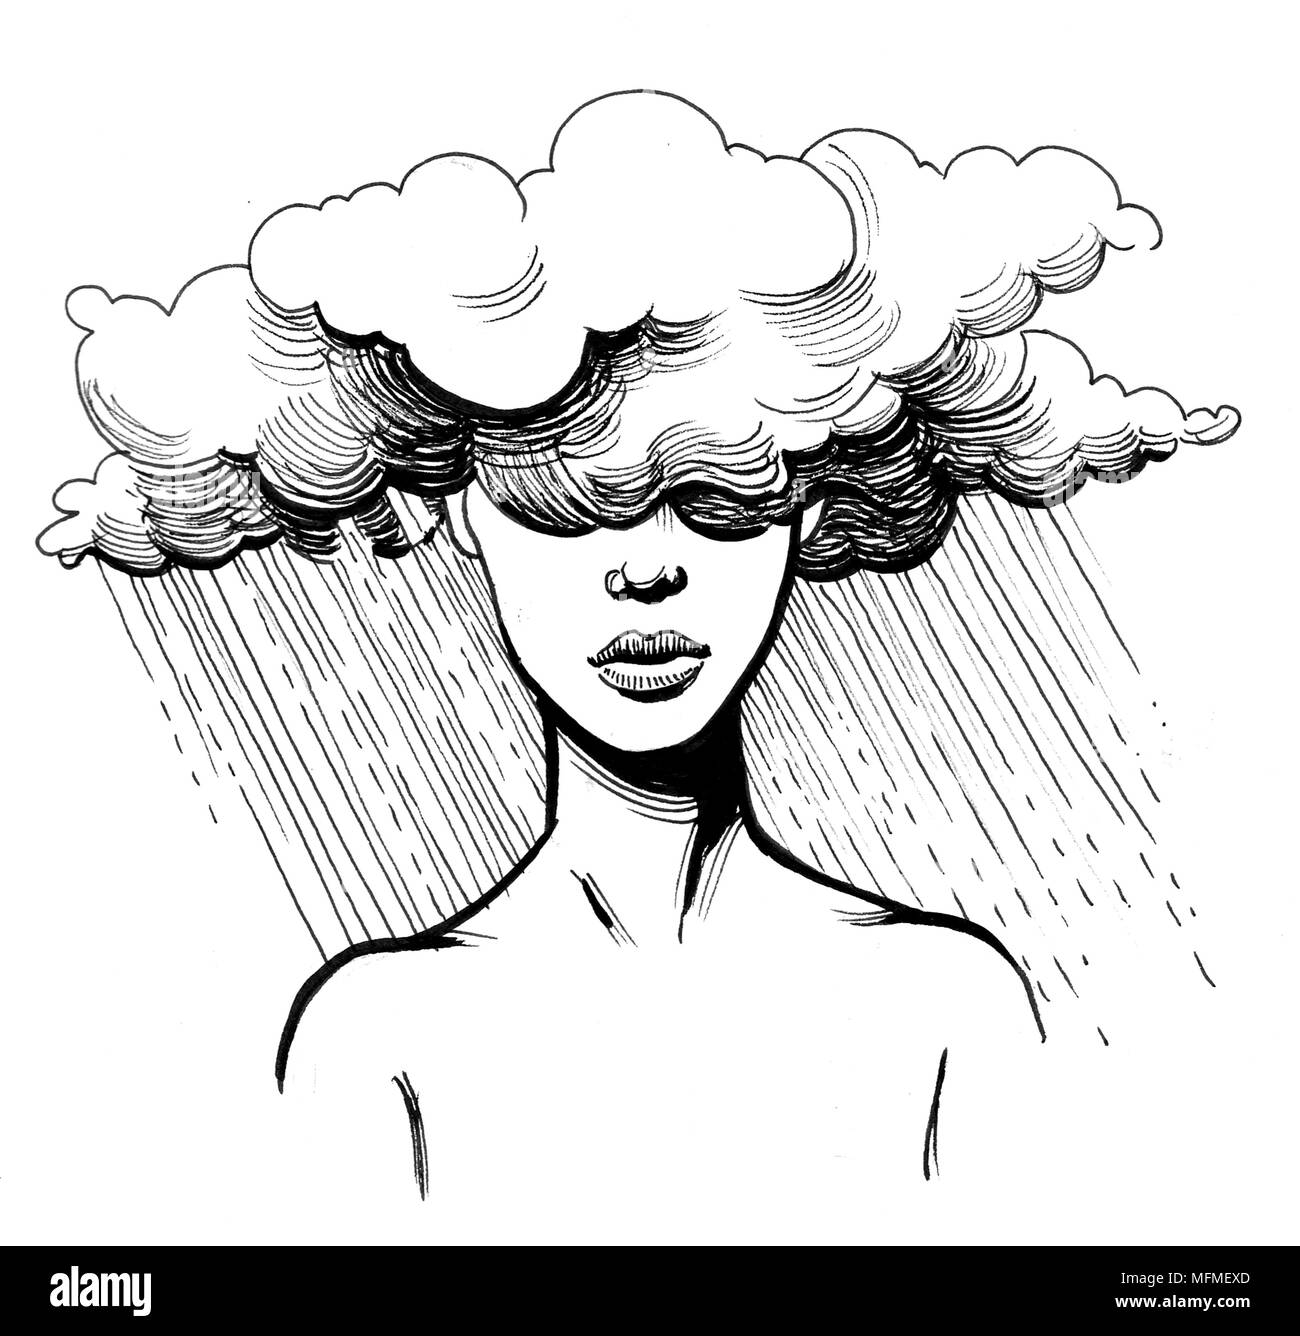 Woman in the rain clouds Stock Photo - Alamy